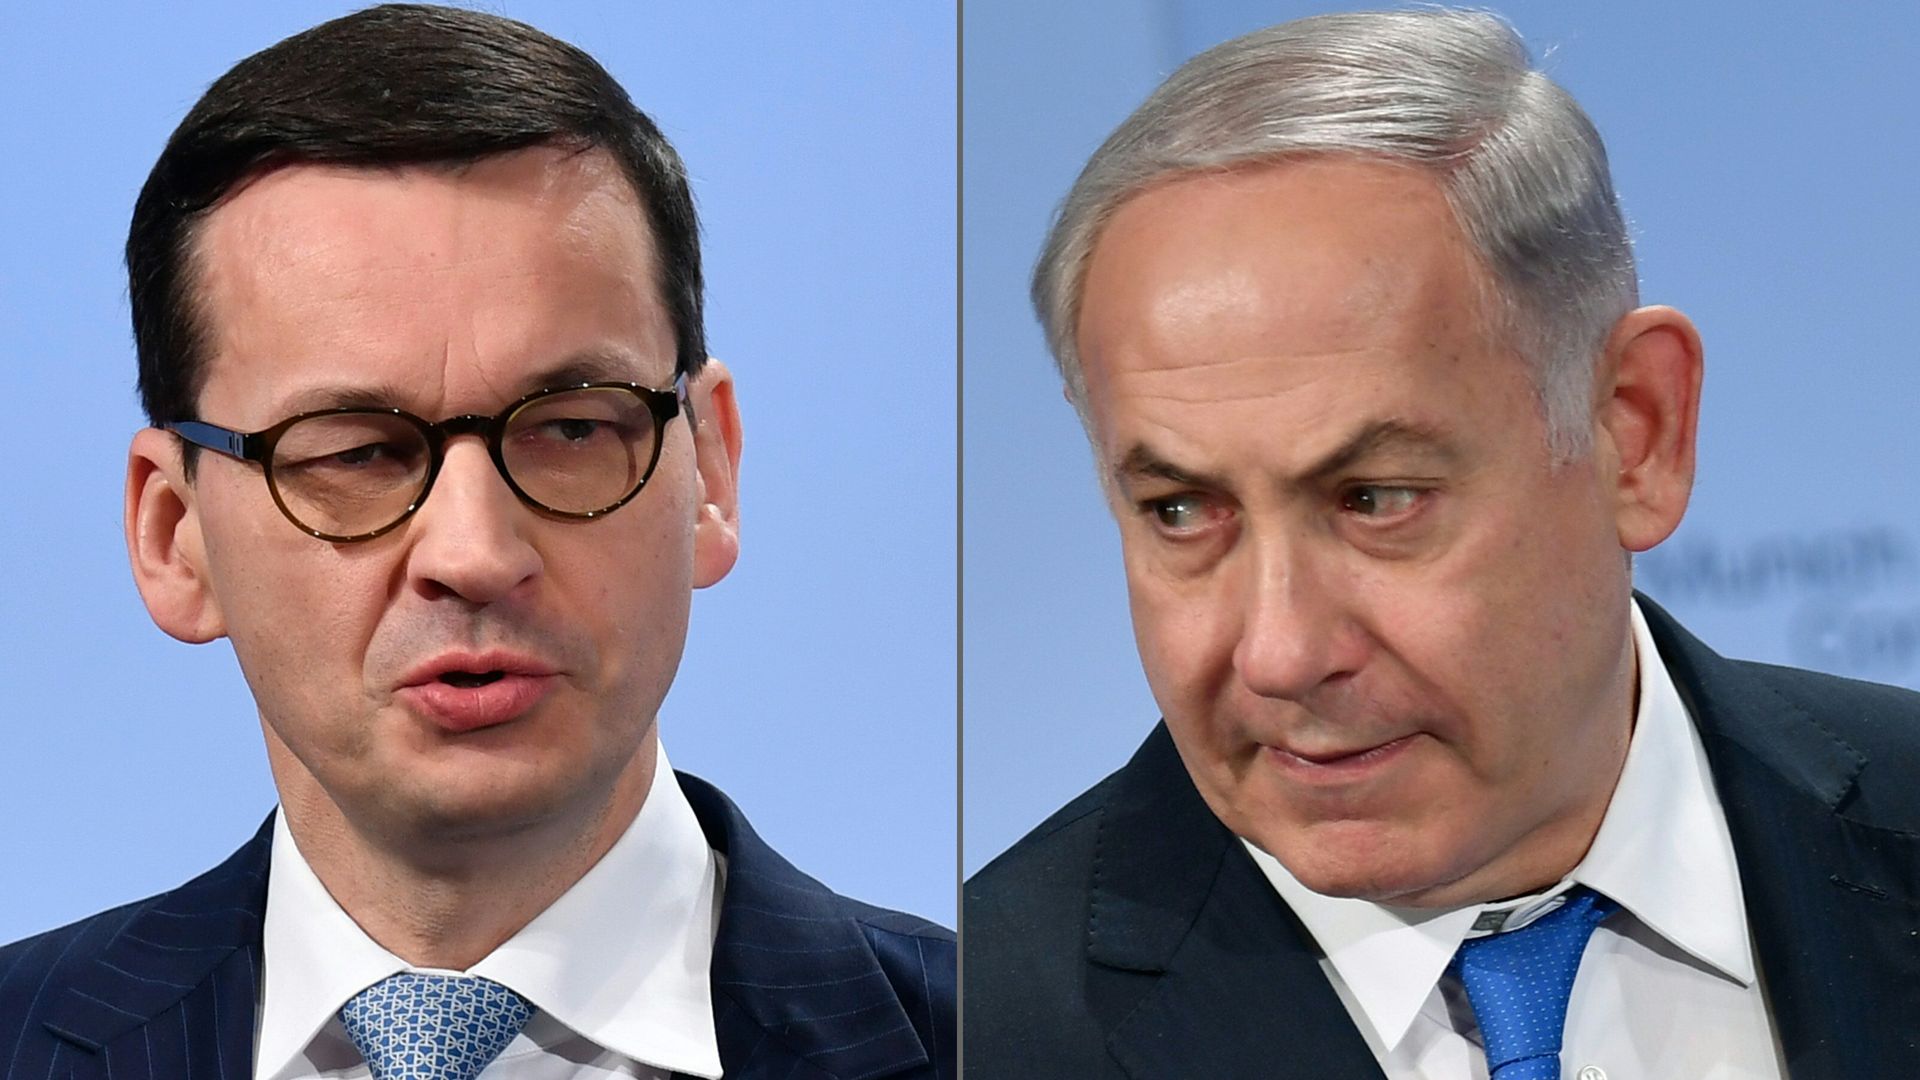 Polish Prime Minister Mateusz Morawiecki and Israeli Prime Minister Benjamin Netanyahu